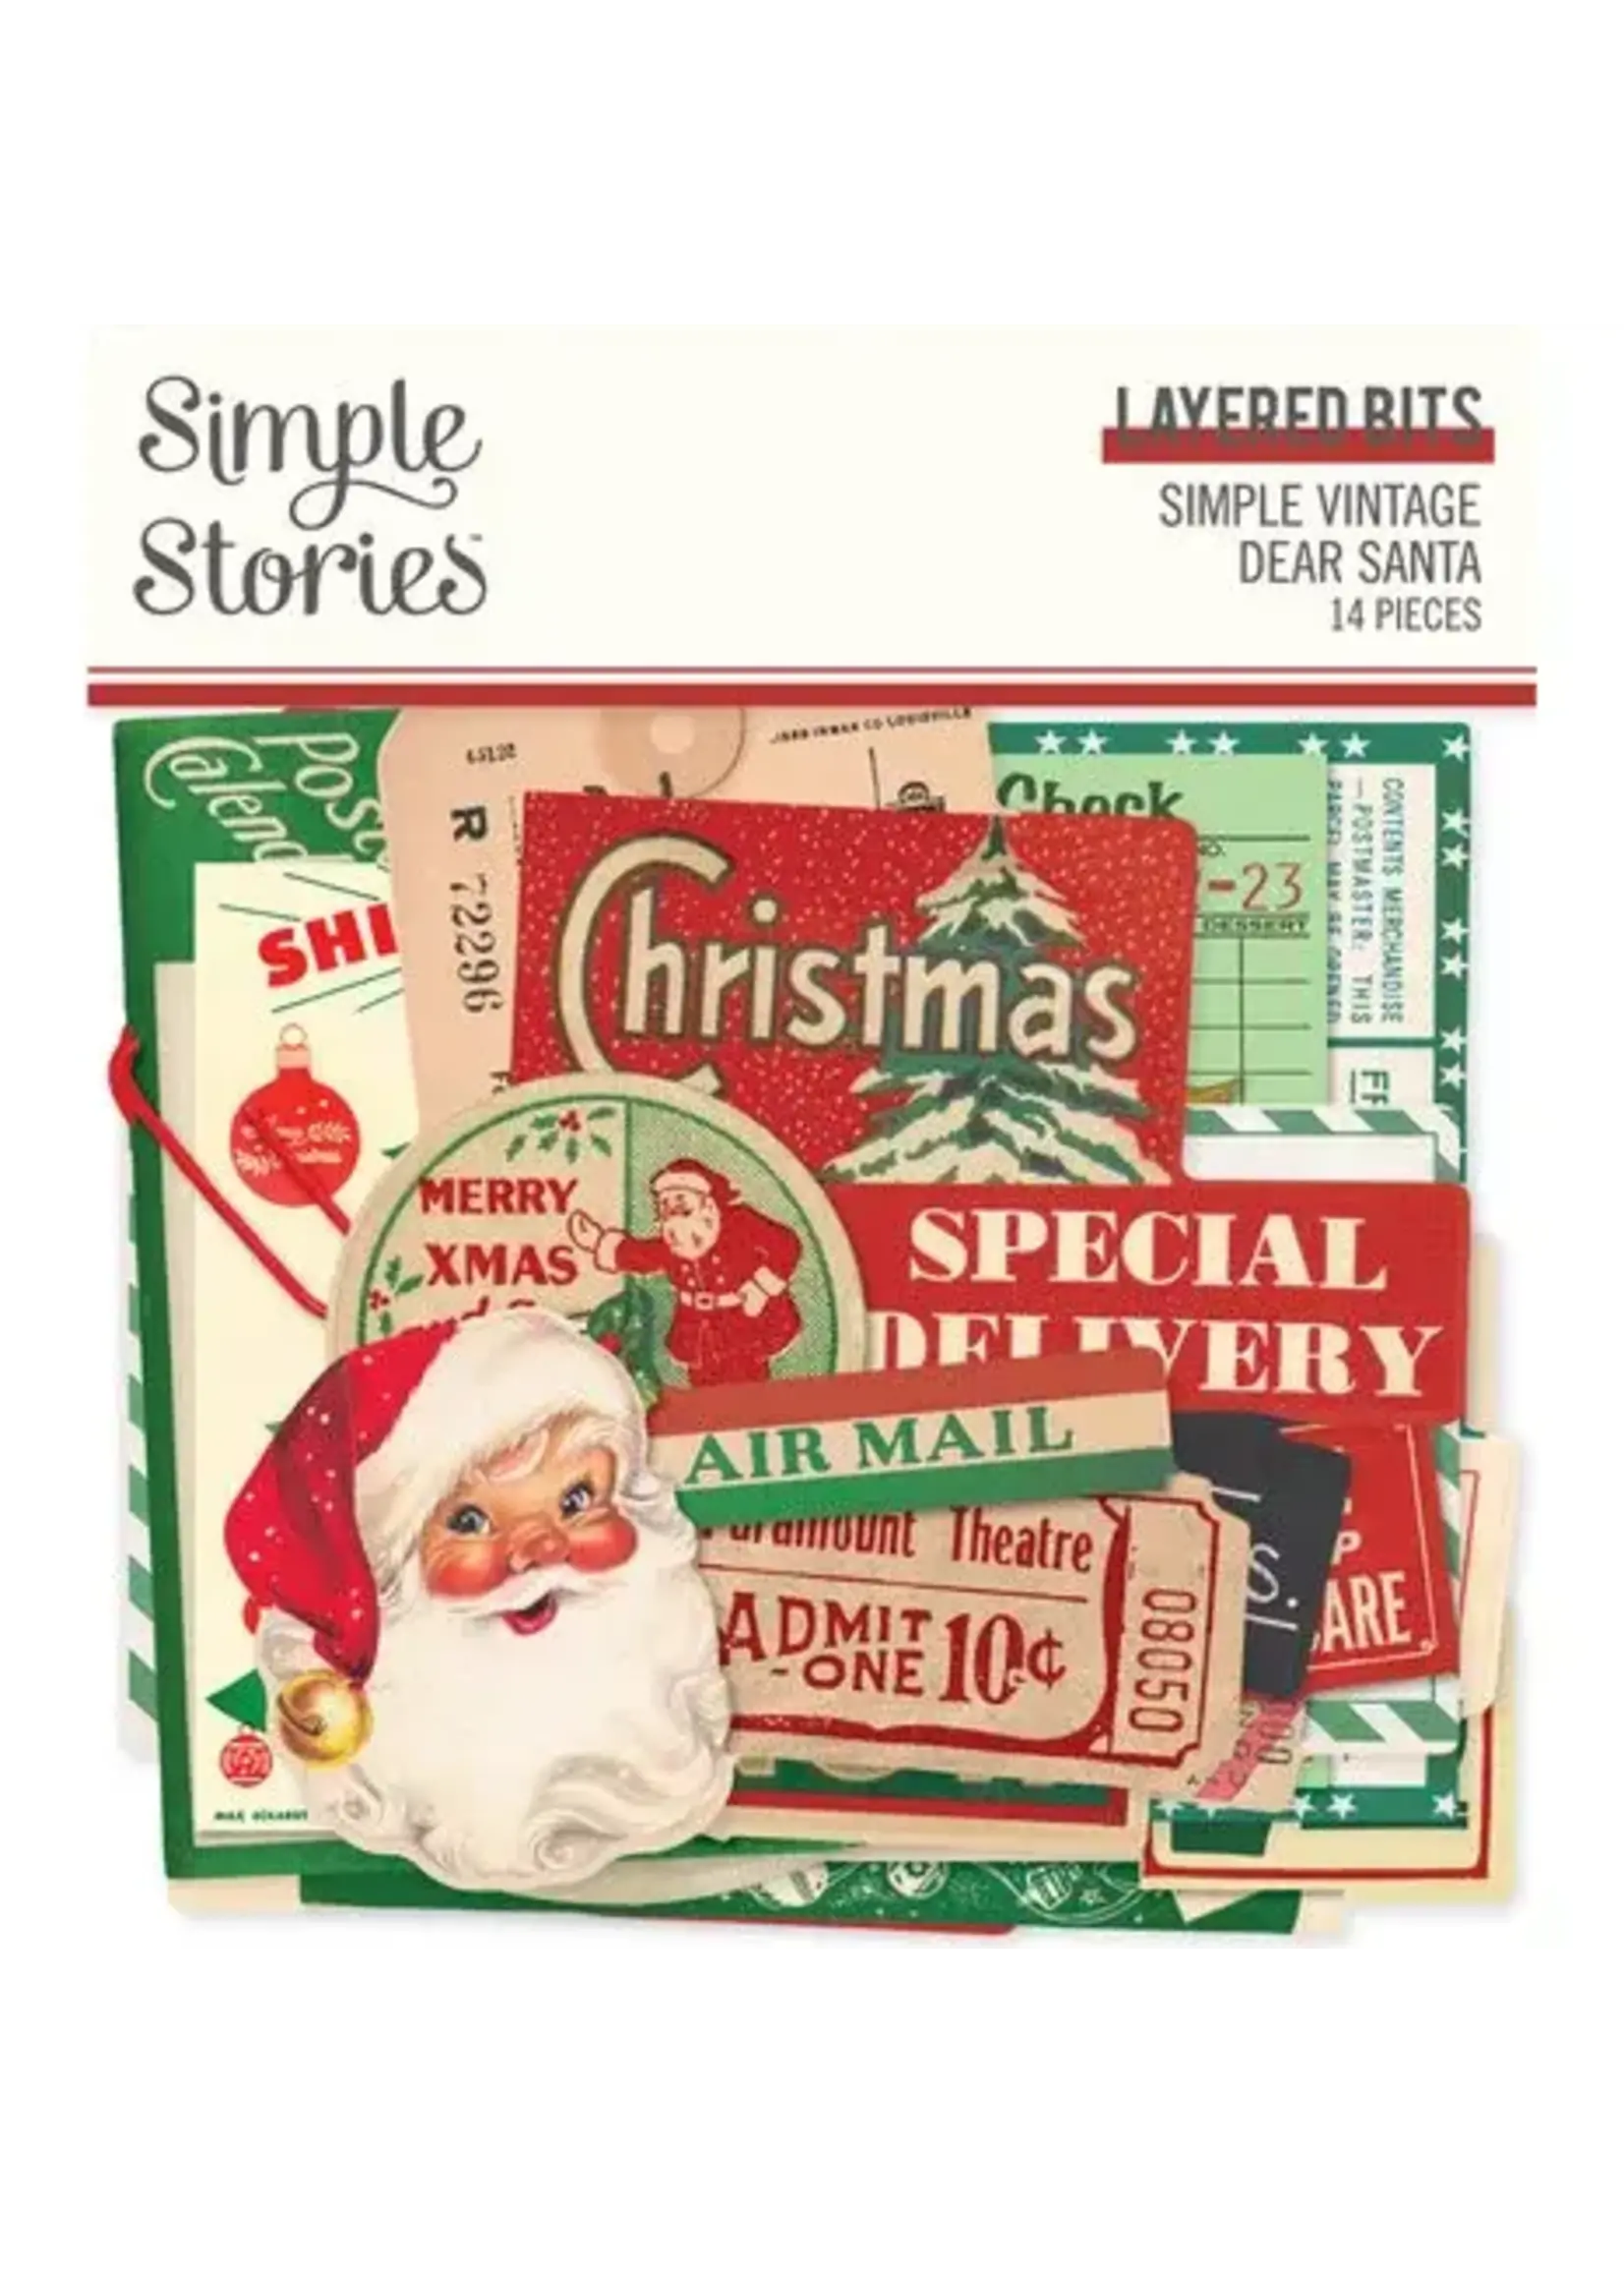 simple stories Simple Vintage Dear Santa Layered Bits & Pieces (20824)